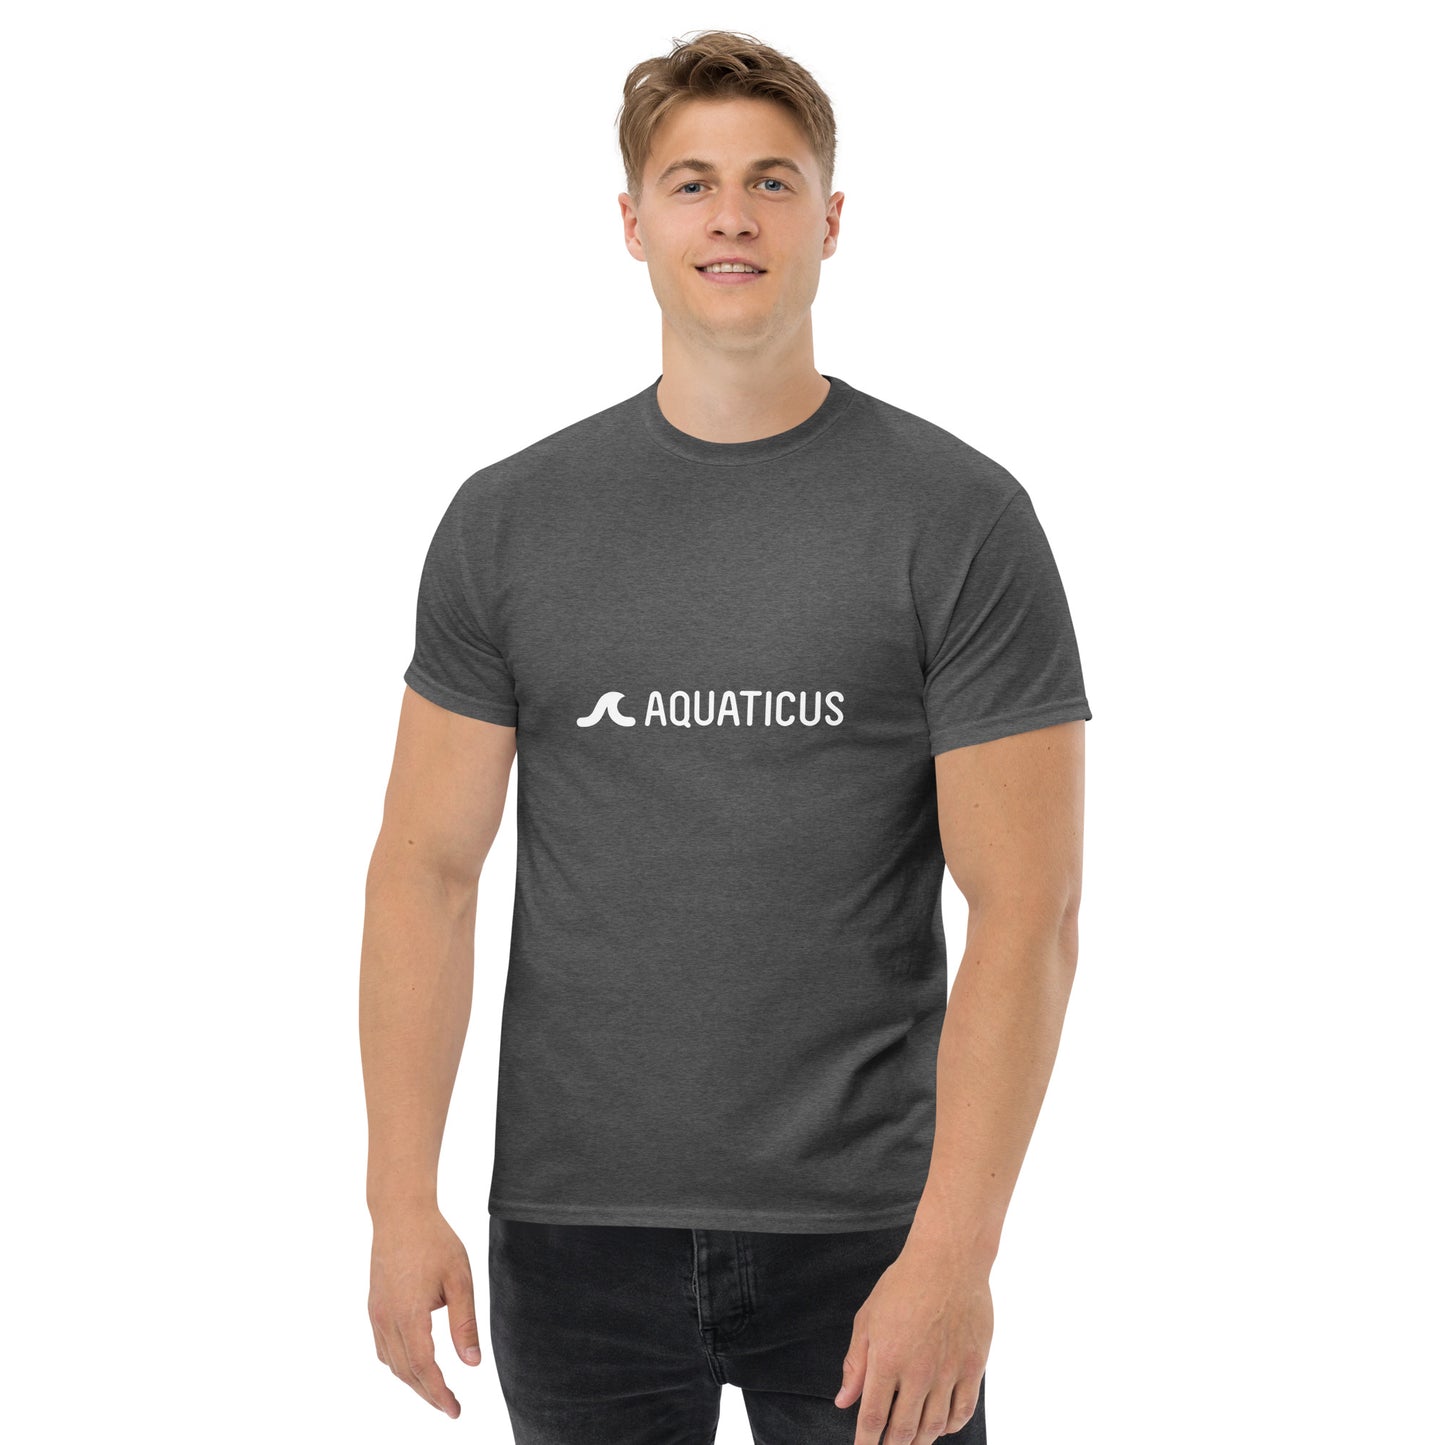 AQUATICUS - Camiseta clássica masculina